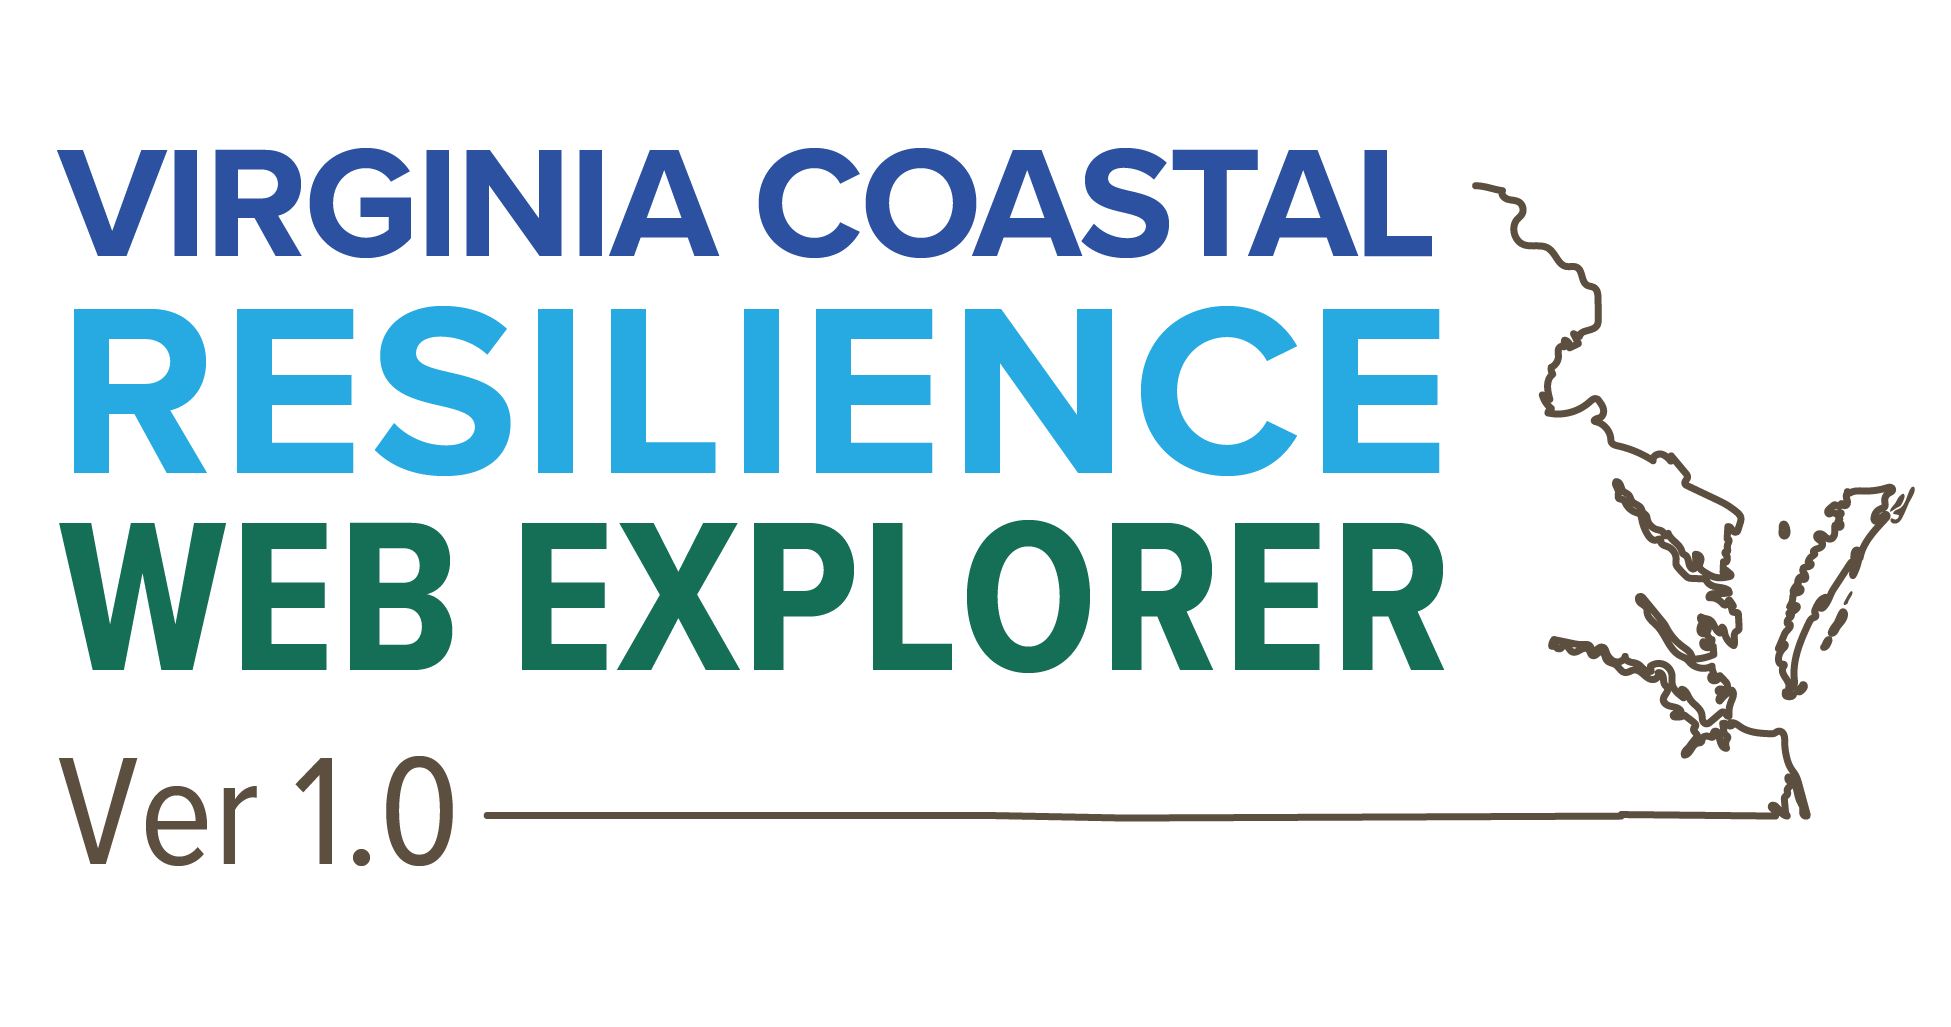 Virginia Coastal Resilience Web Explorer v. 1